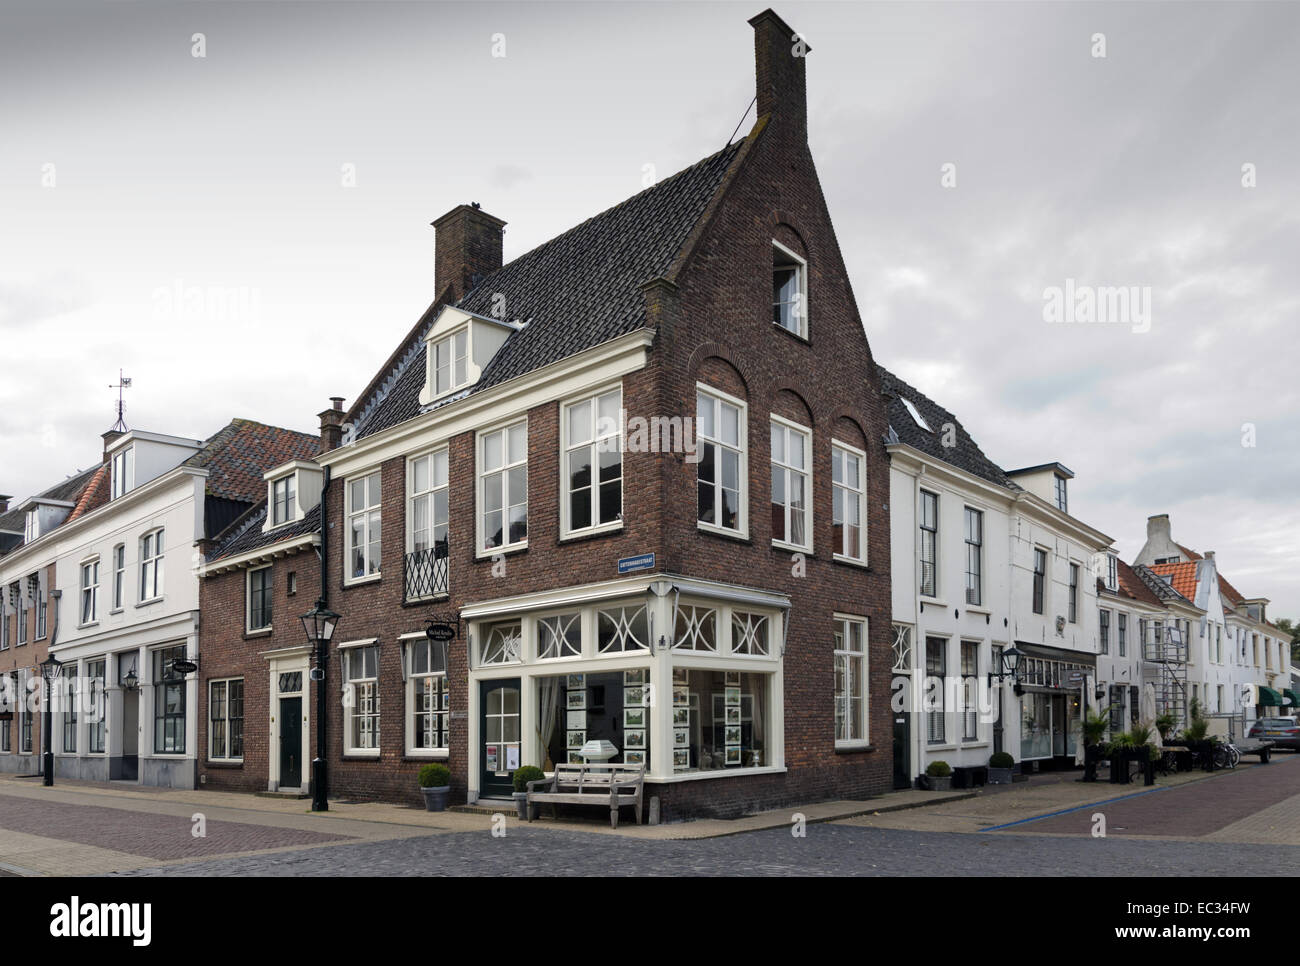 NAARDEN, Paesi Bassi - 30 aprile: Tipica architettura olandese il 30 aprile 2013 a Naarden, Paesi Bassi Foto Stock